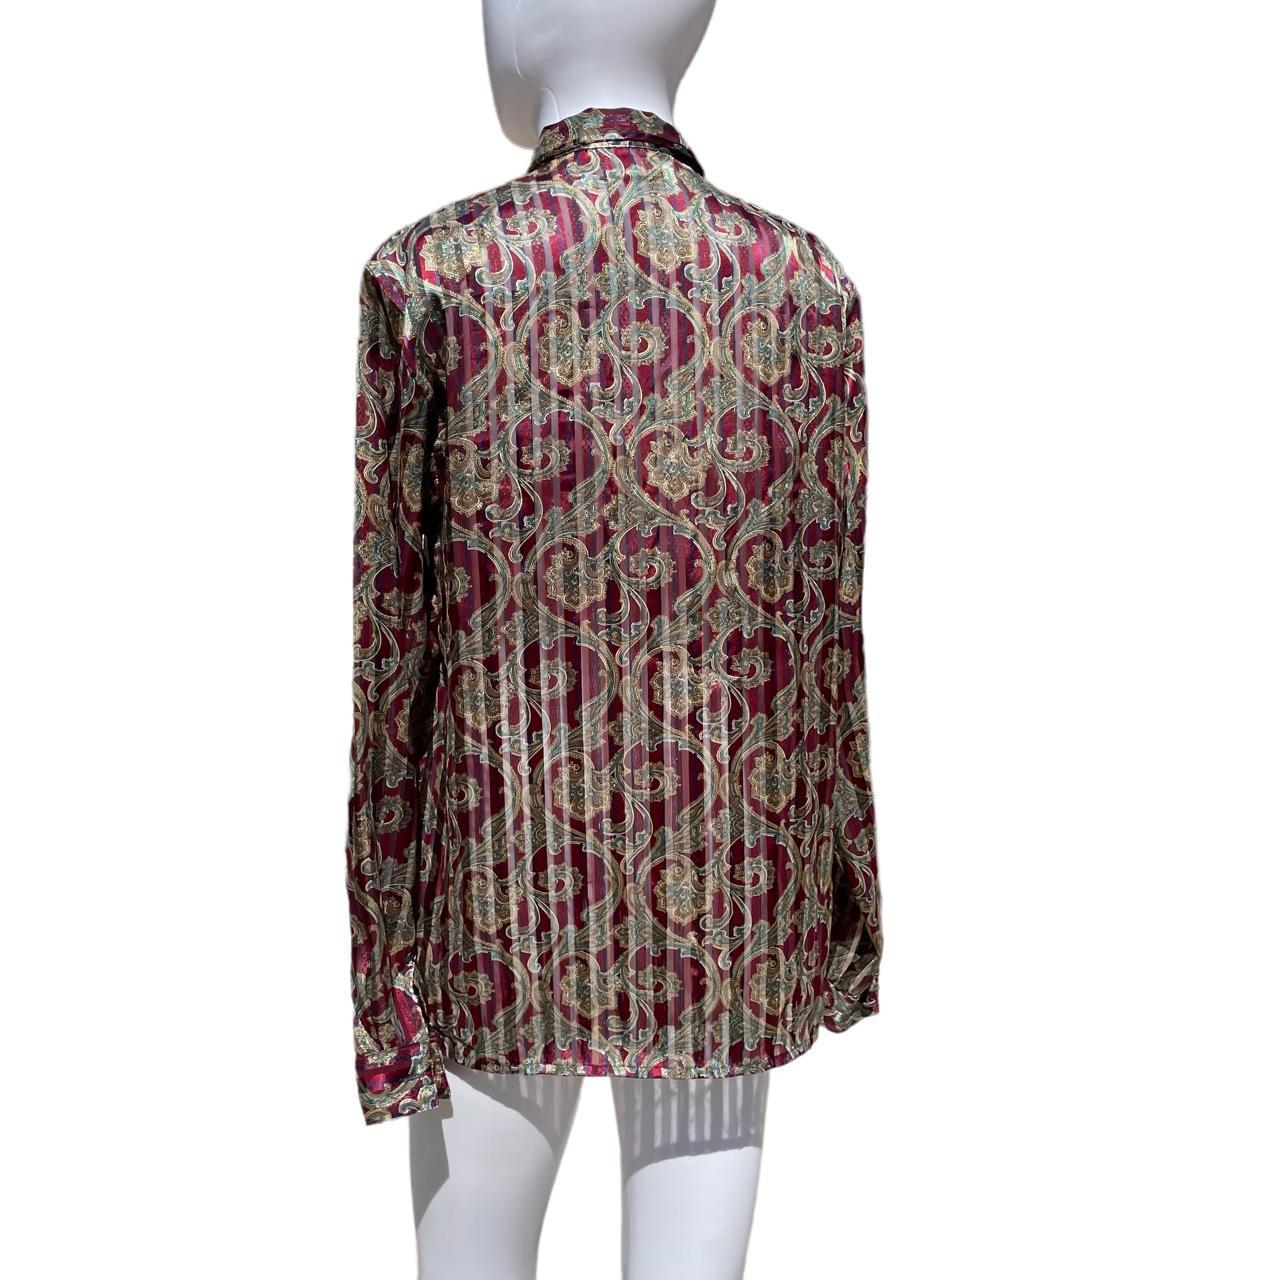 Vintage Paisley sheer blouse Size S #vintage... - Depop